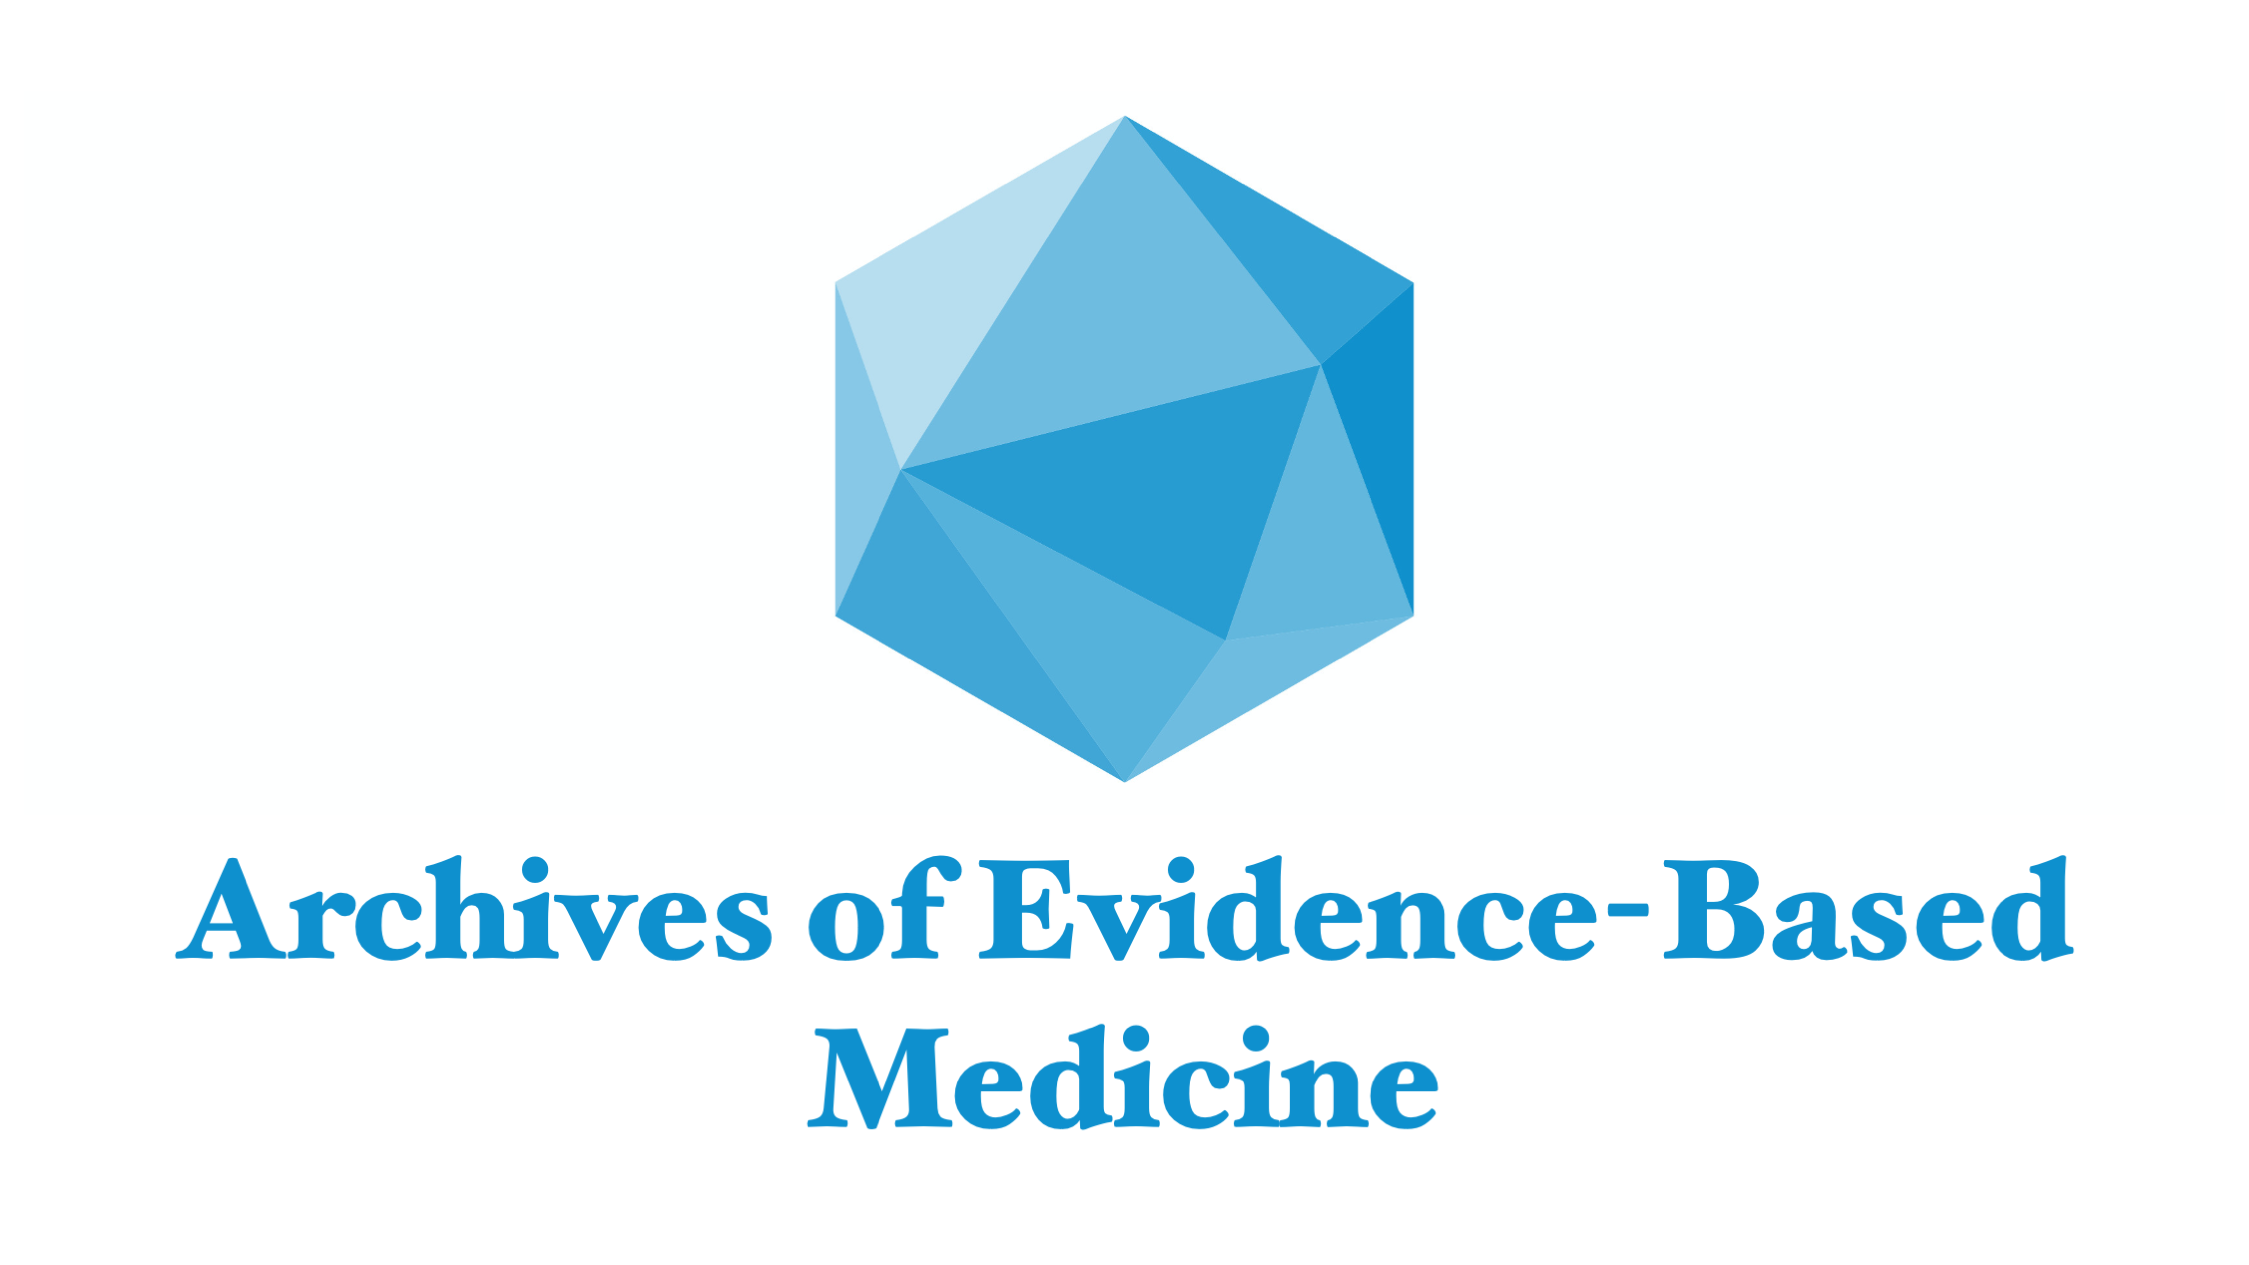 Archives of Evidence-Based Medicine